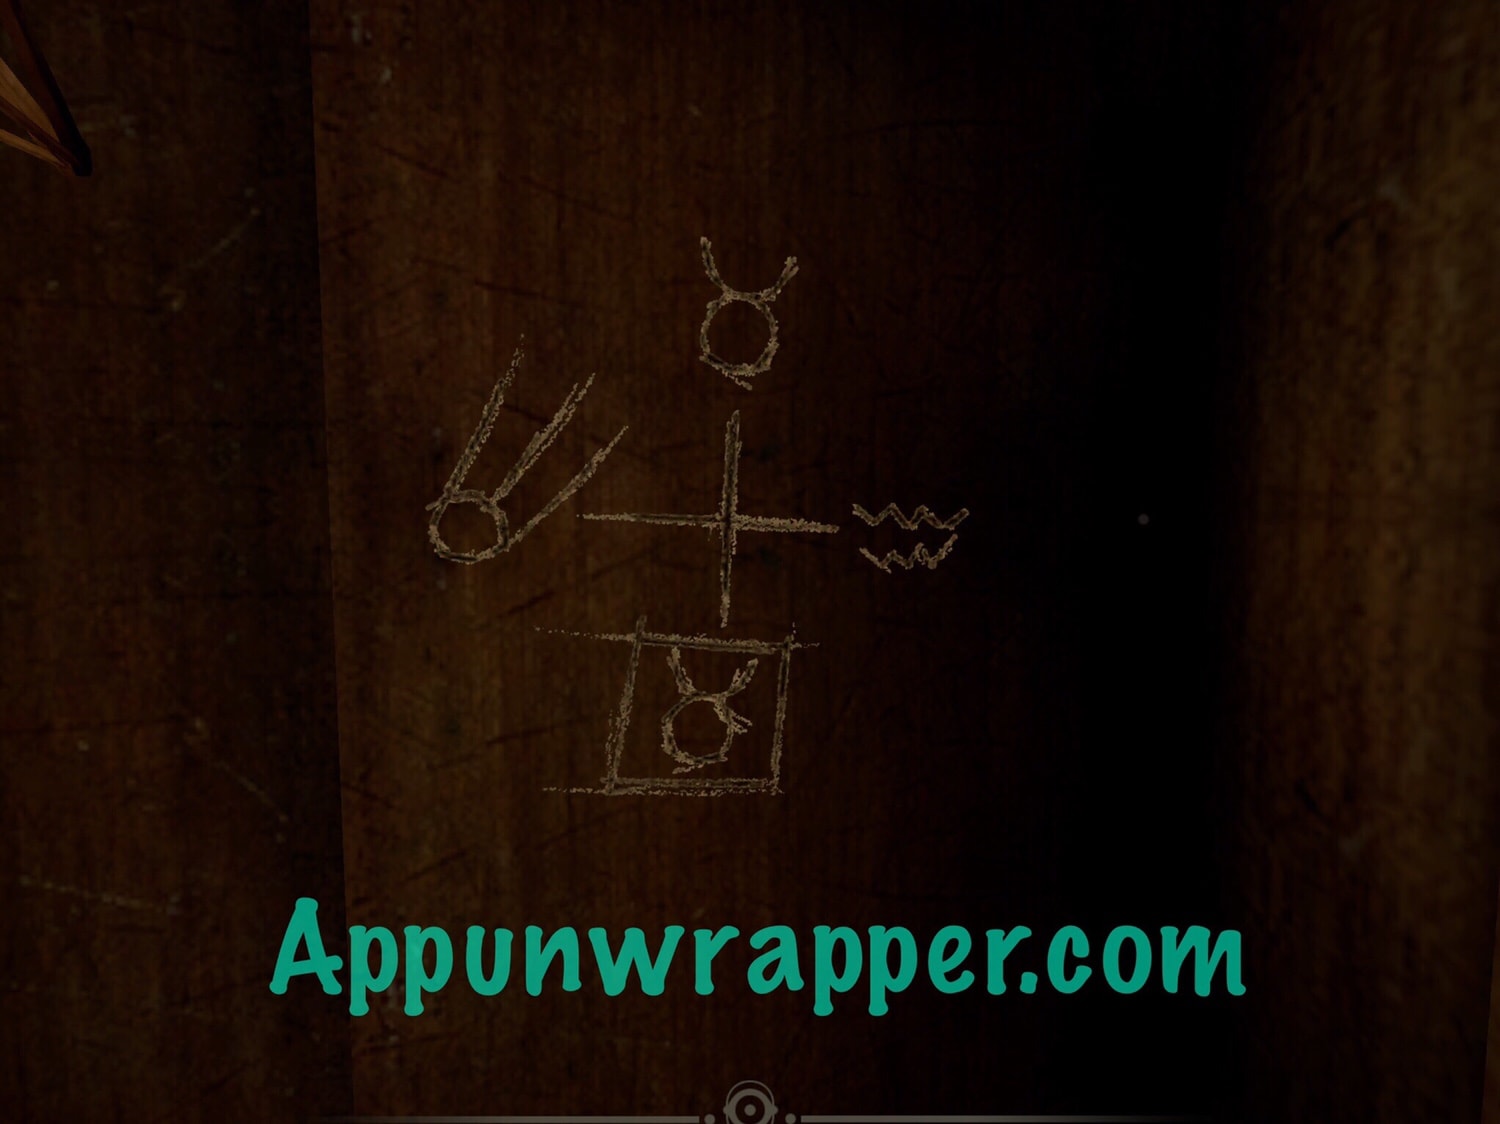 the-eyes-of-ara-chapter-2-walkthrough-guide-appunwrapper